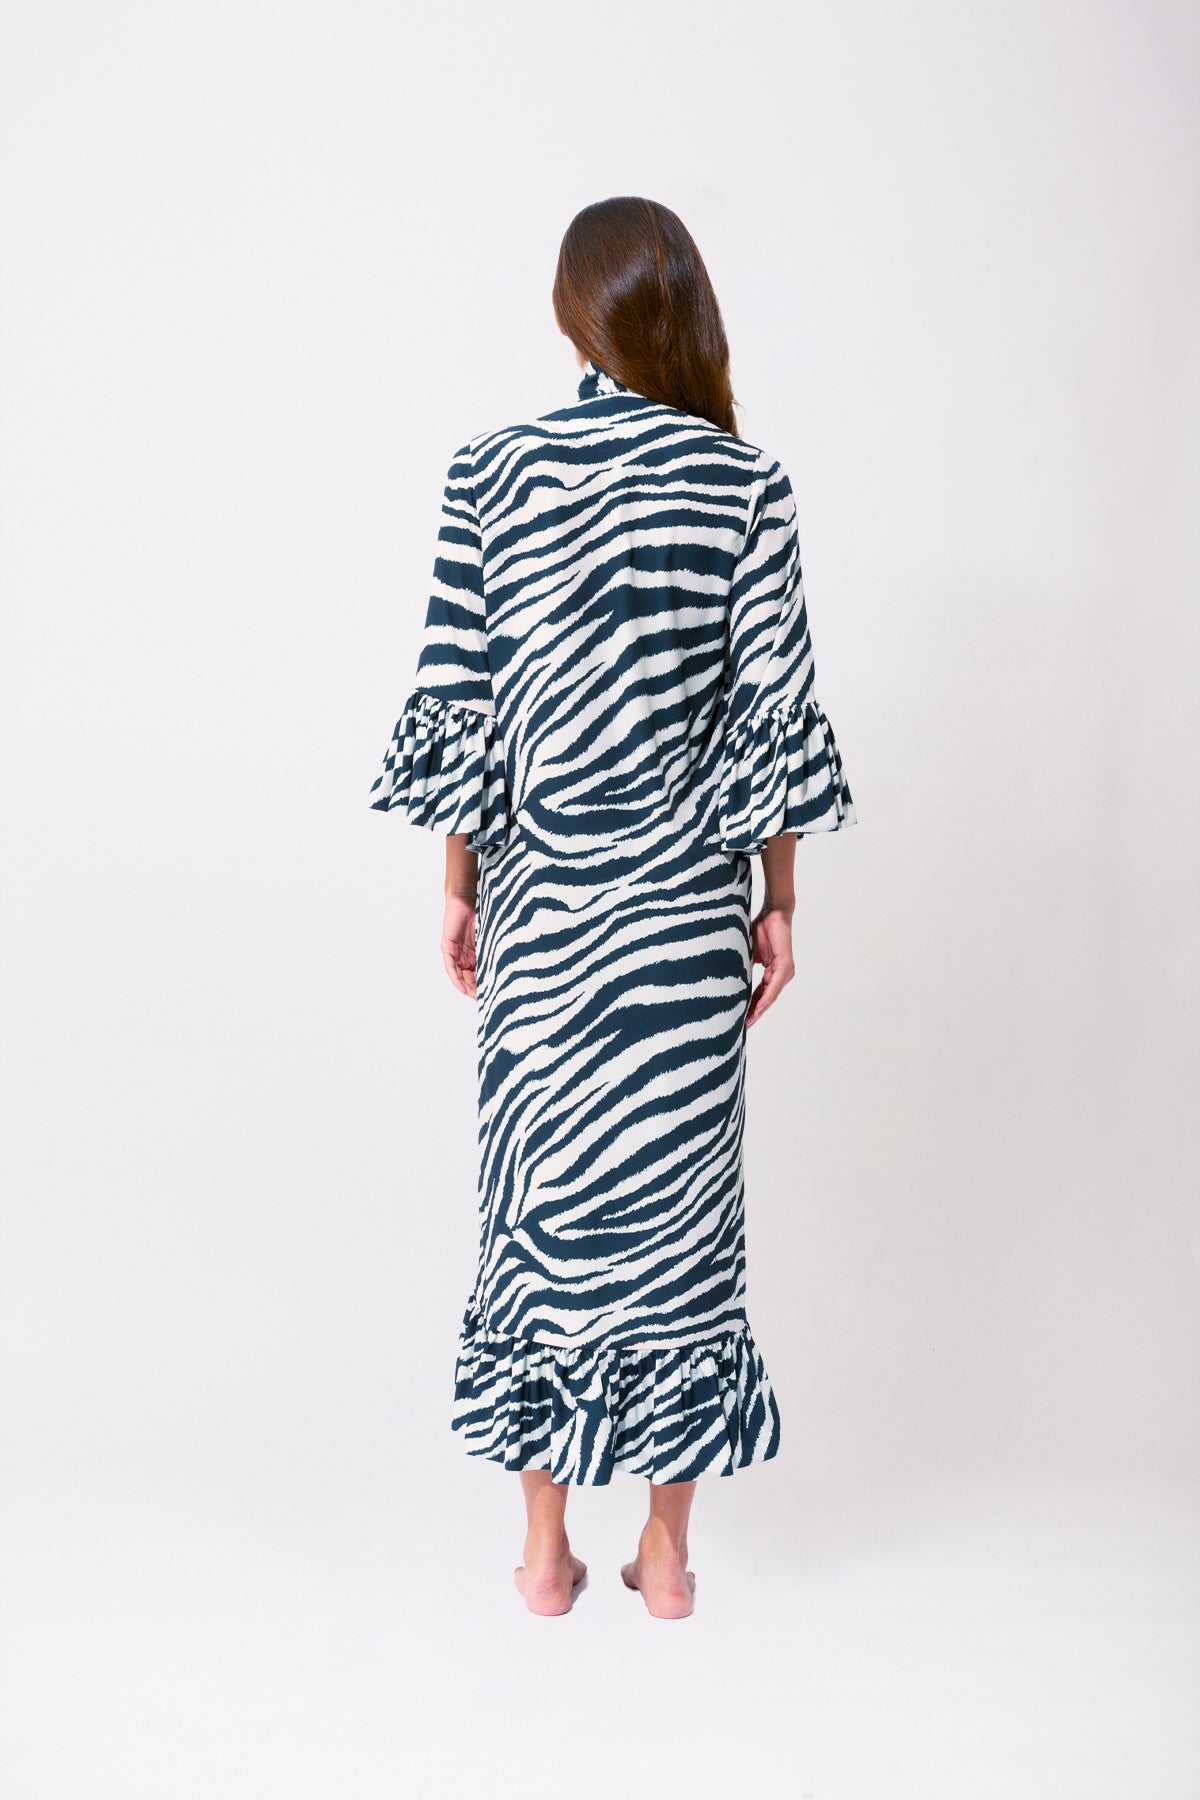 Careyes Loreto Robe Zebra Negro